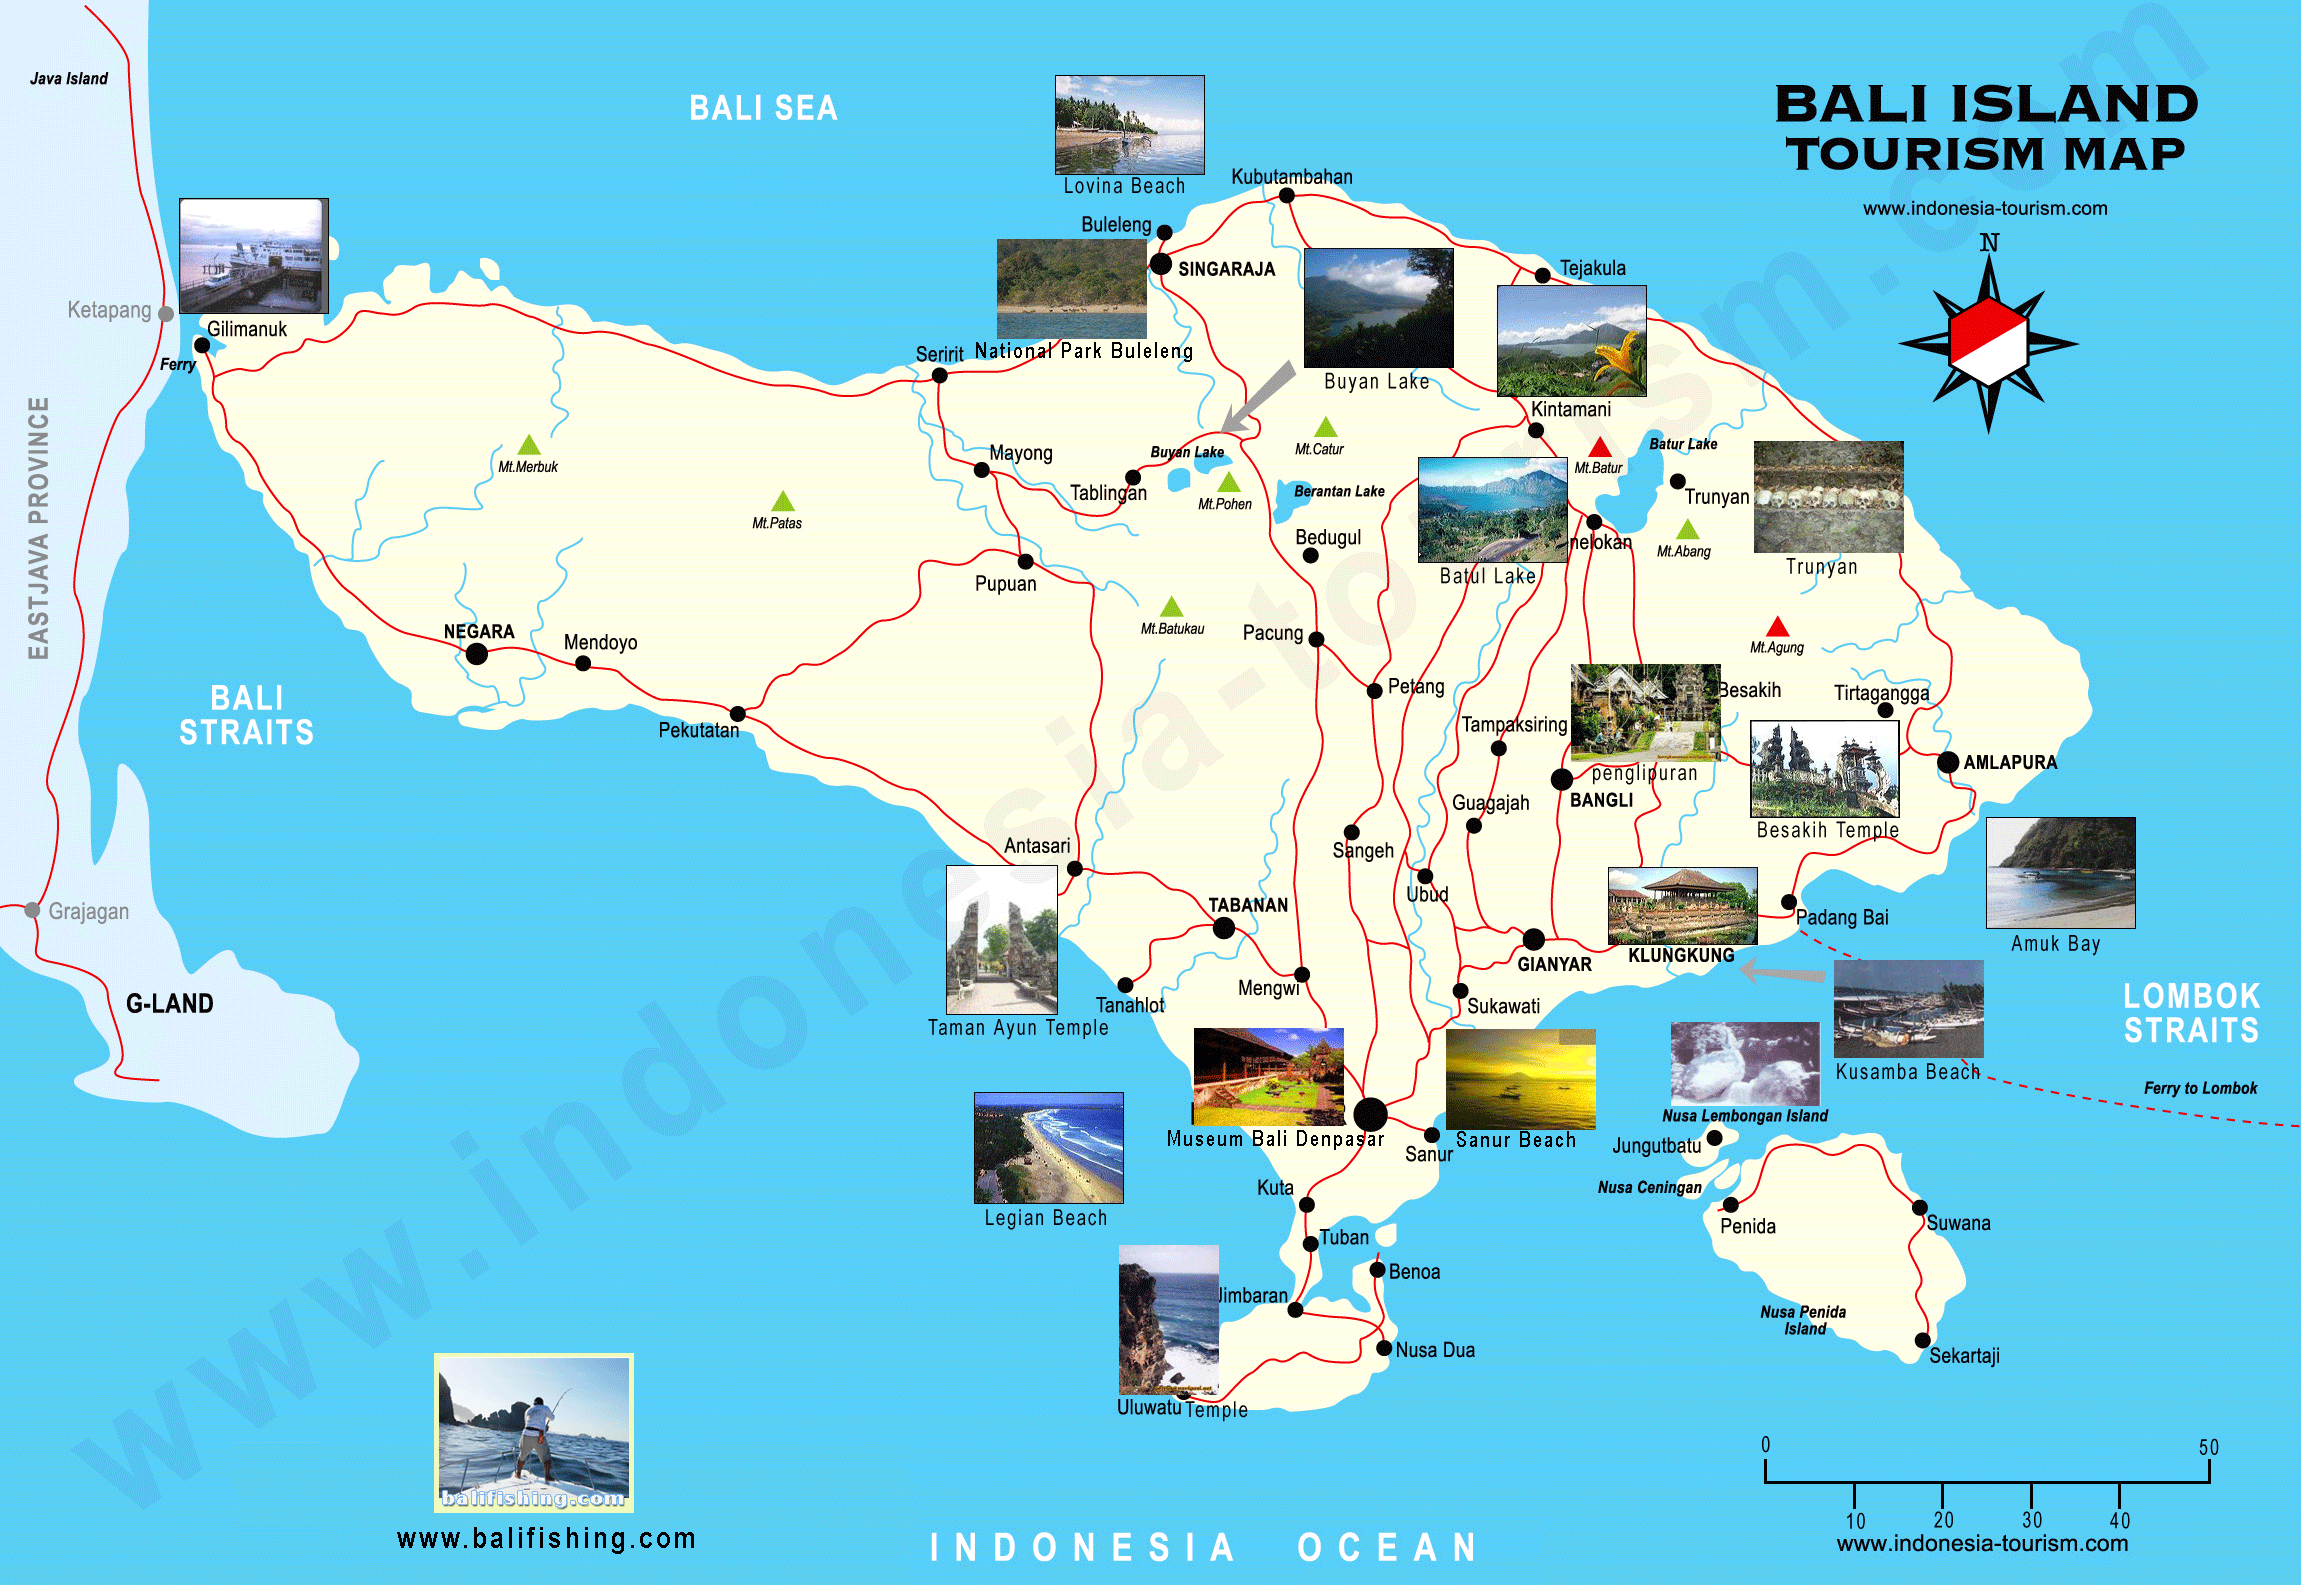 Indonesia Tourism: Bali Island Tourism Map